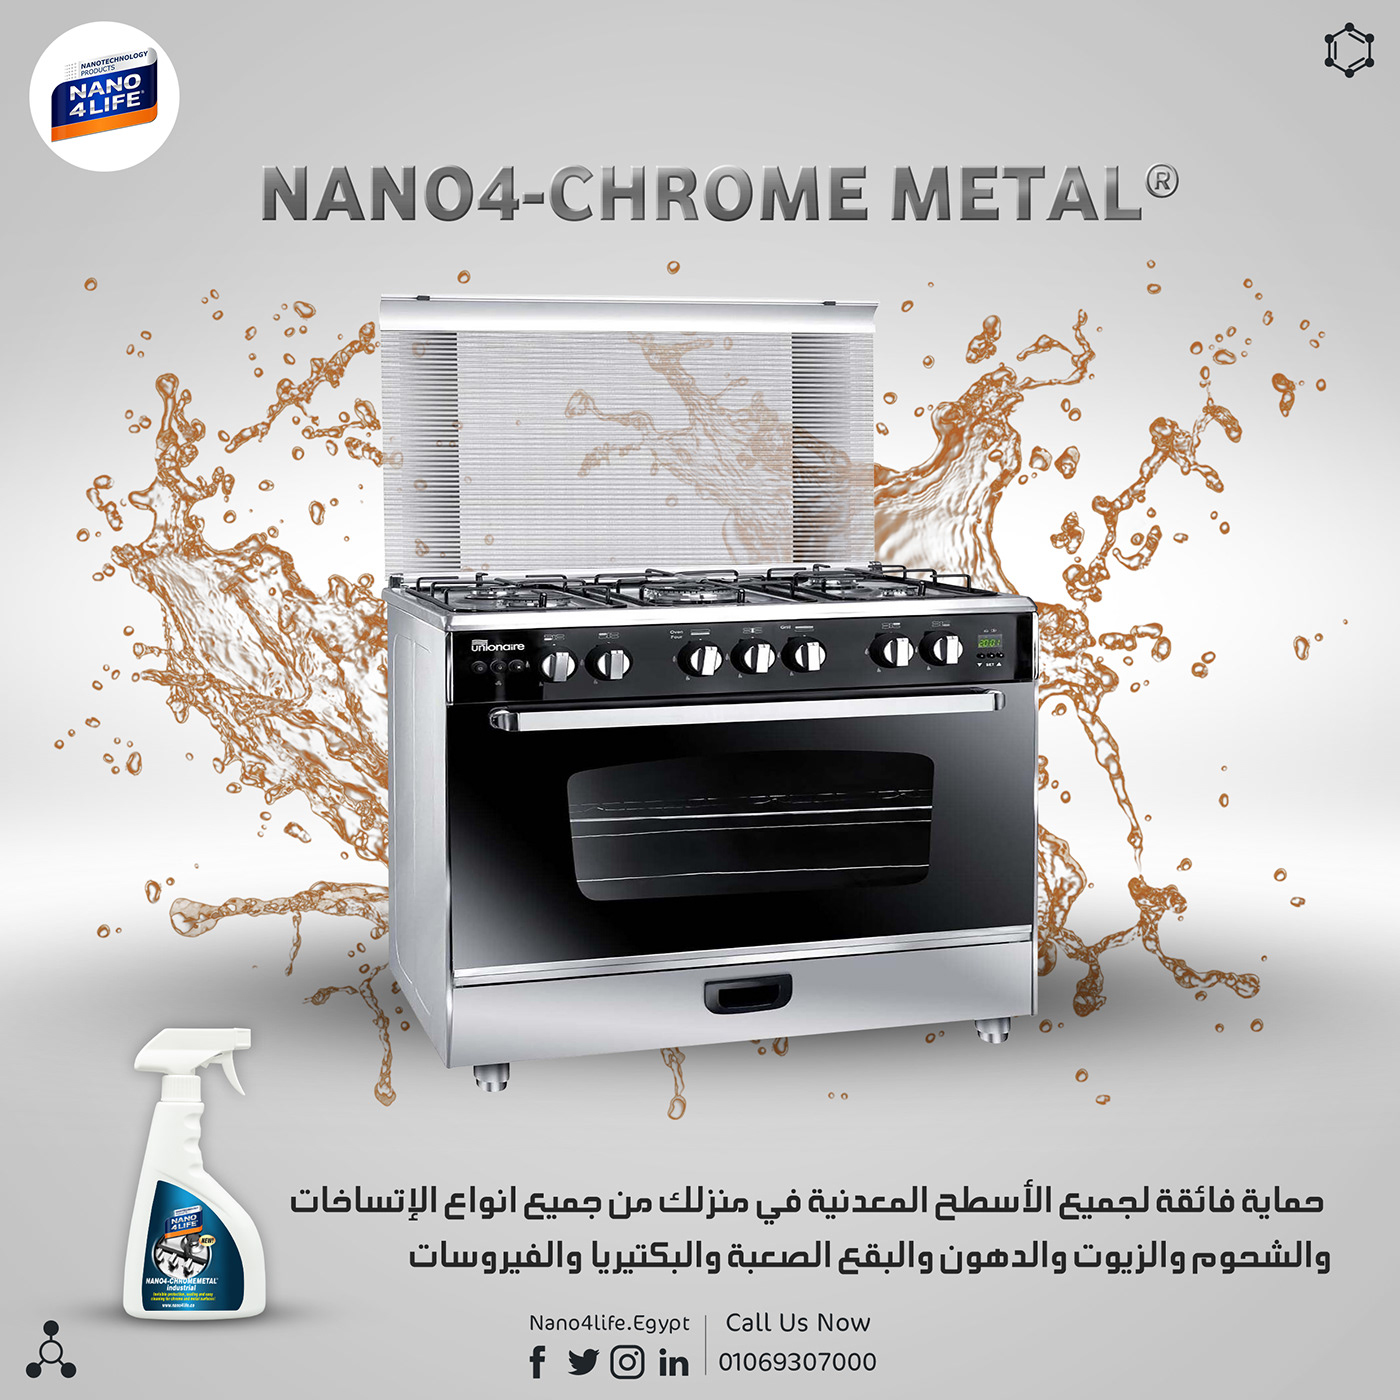 clean coating furniture hydrophobic Interior nano nanotechnology protection waterproof